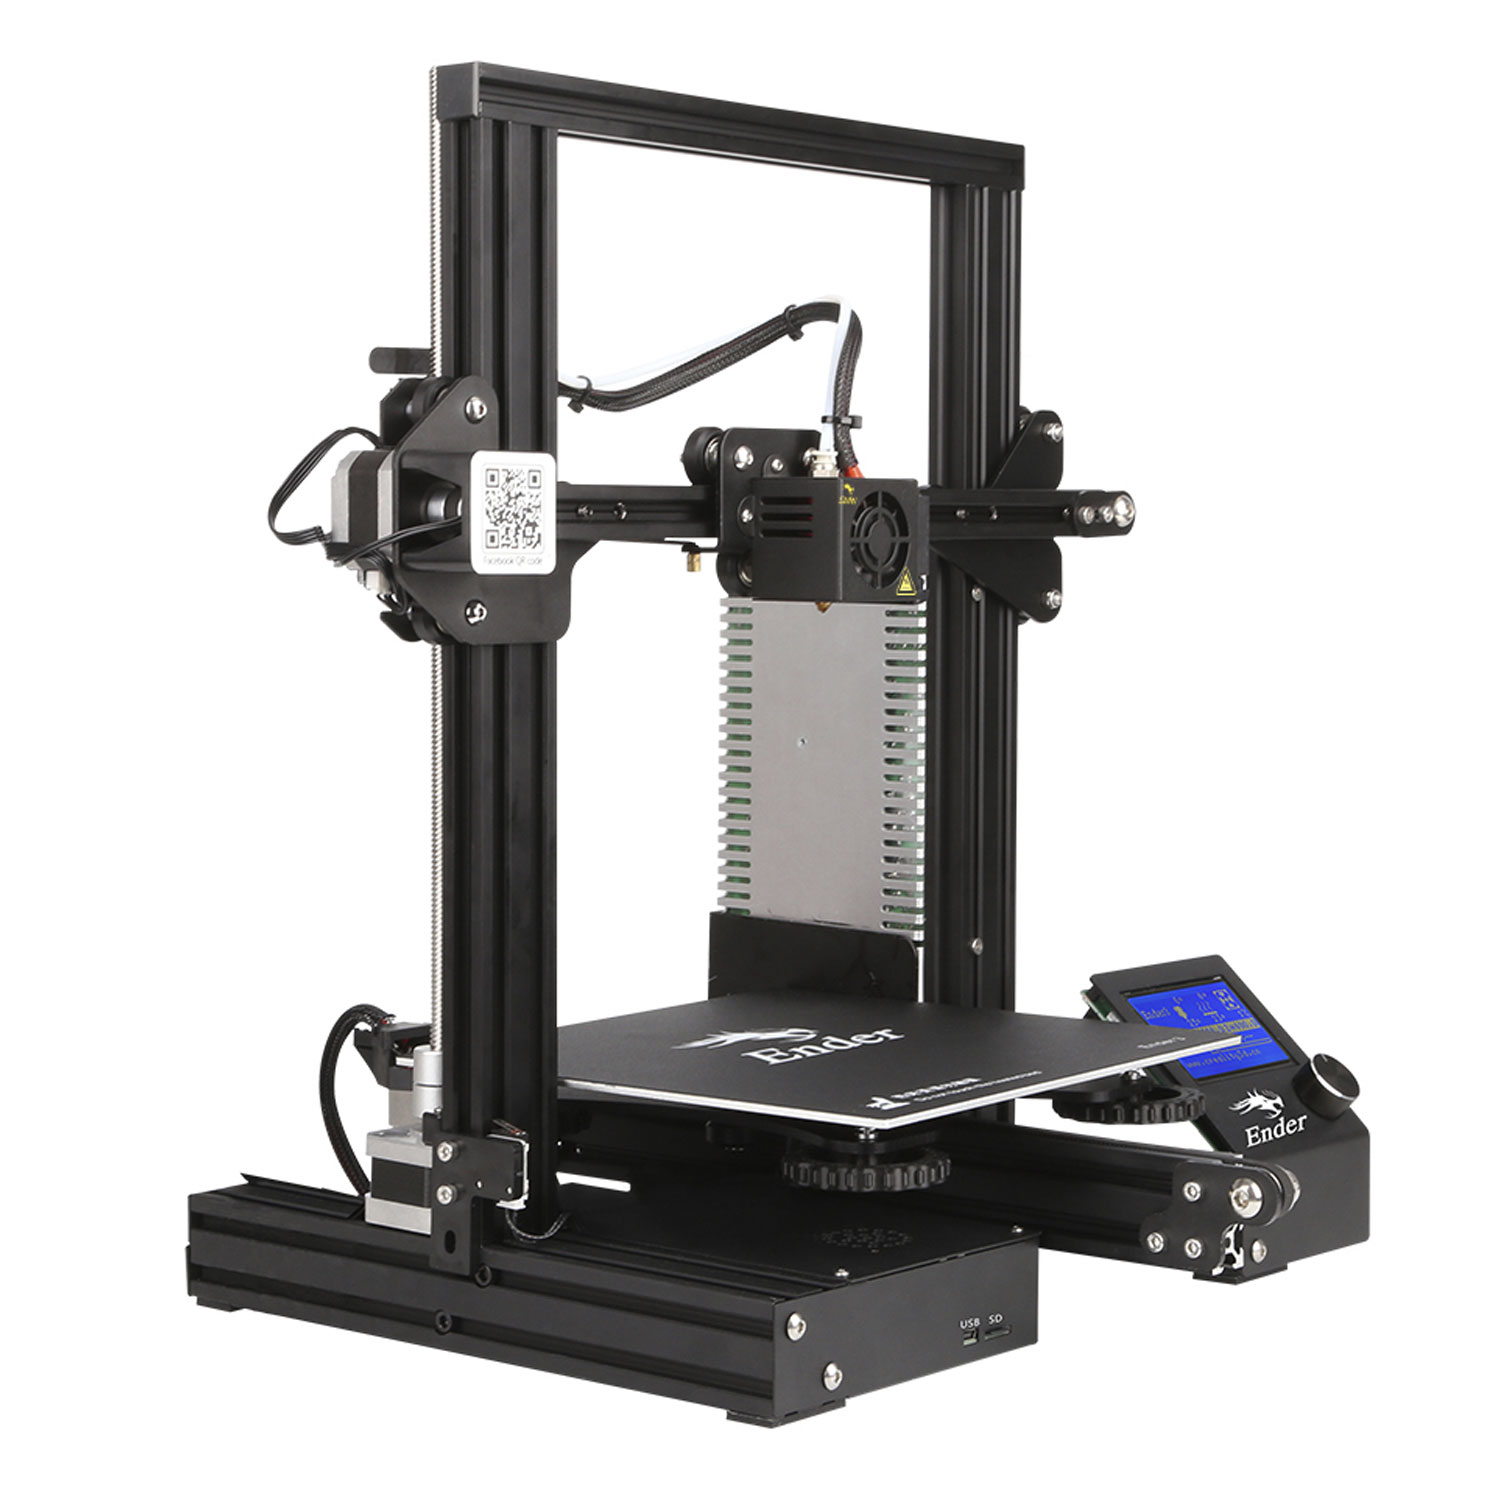 Impressora 3D Creality Ender-3-B (220 x 220 x 250MM)